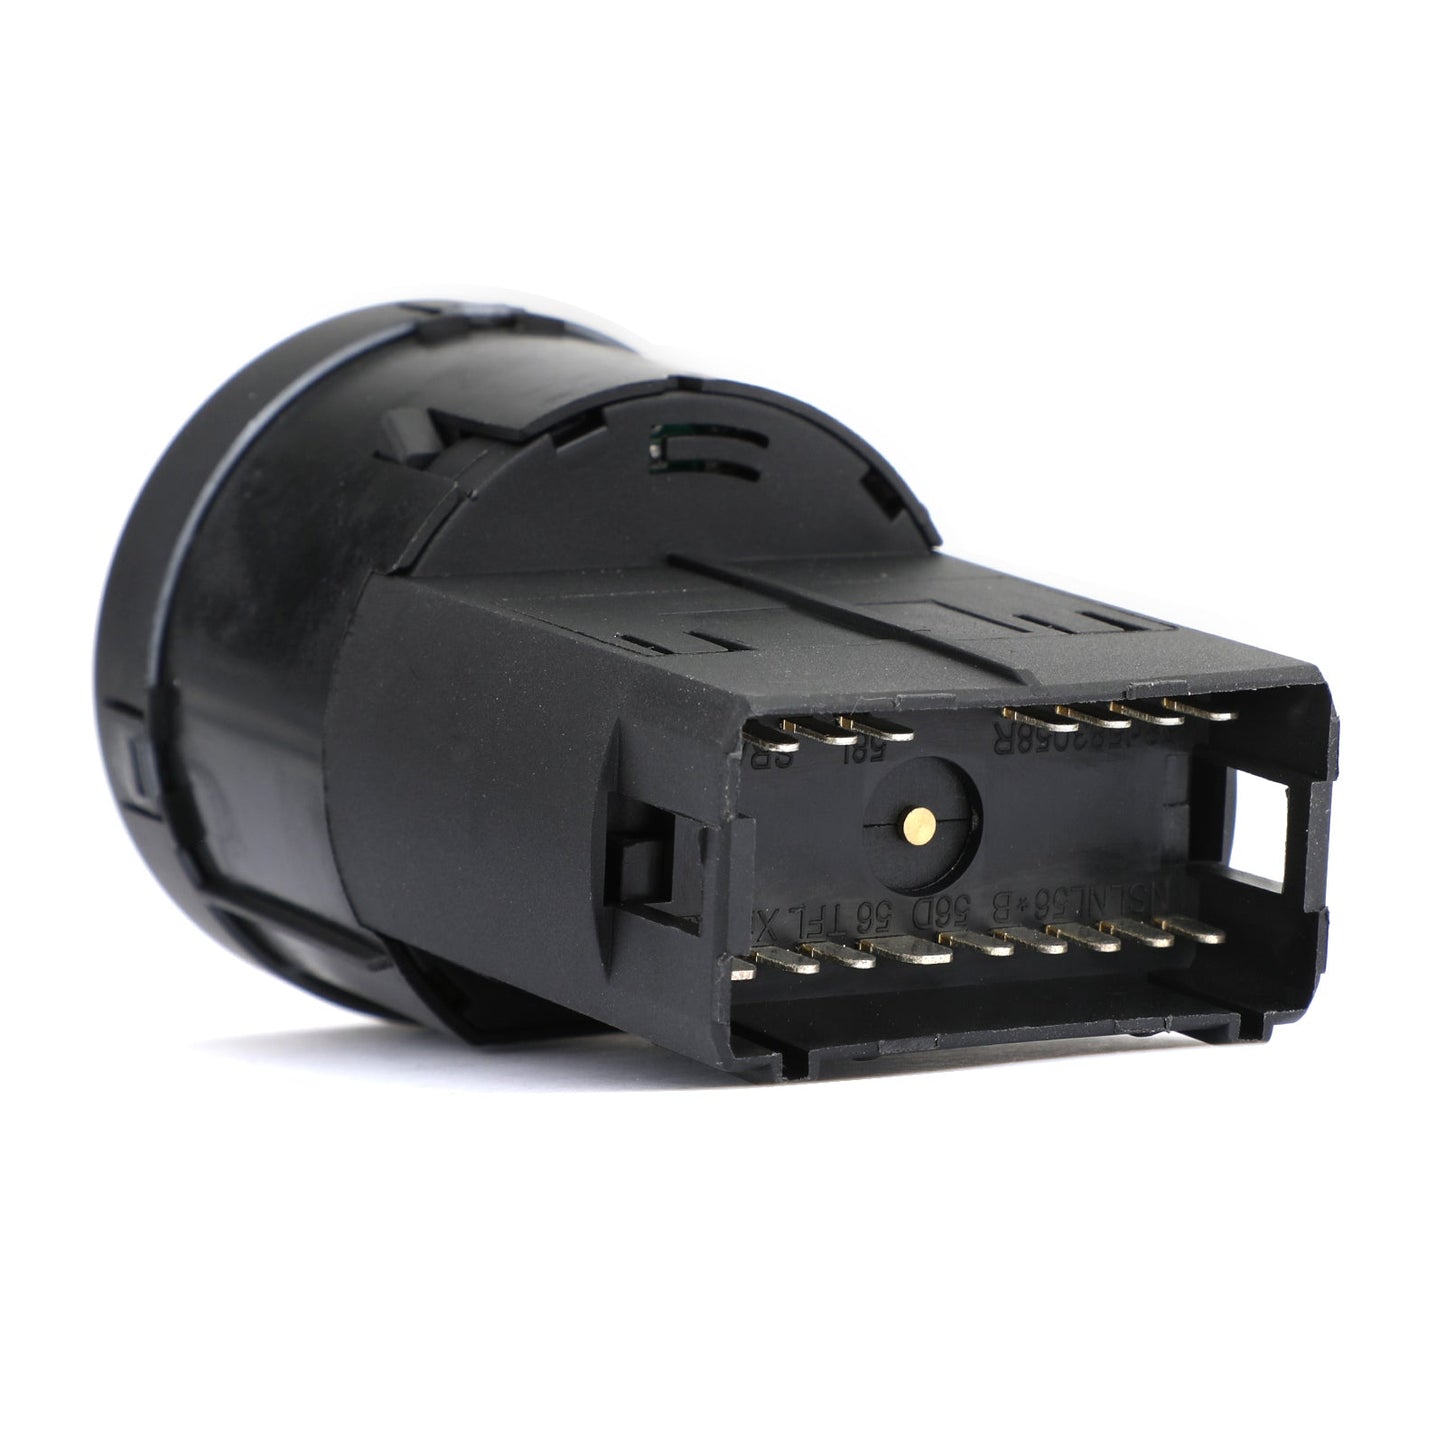 Headlight Control Head Light Switch for For Audi A4 B6 Quattro 02-05 S4 04-05 A4 B7 06-08 Black